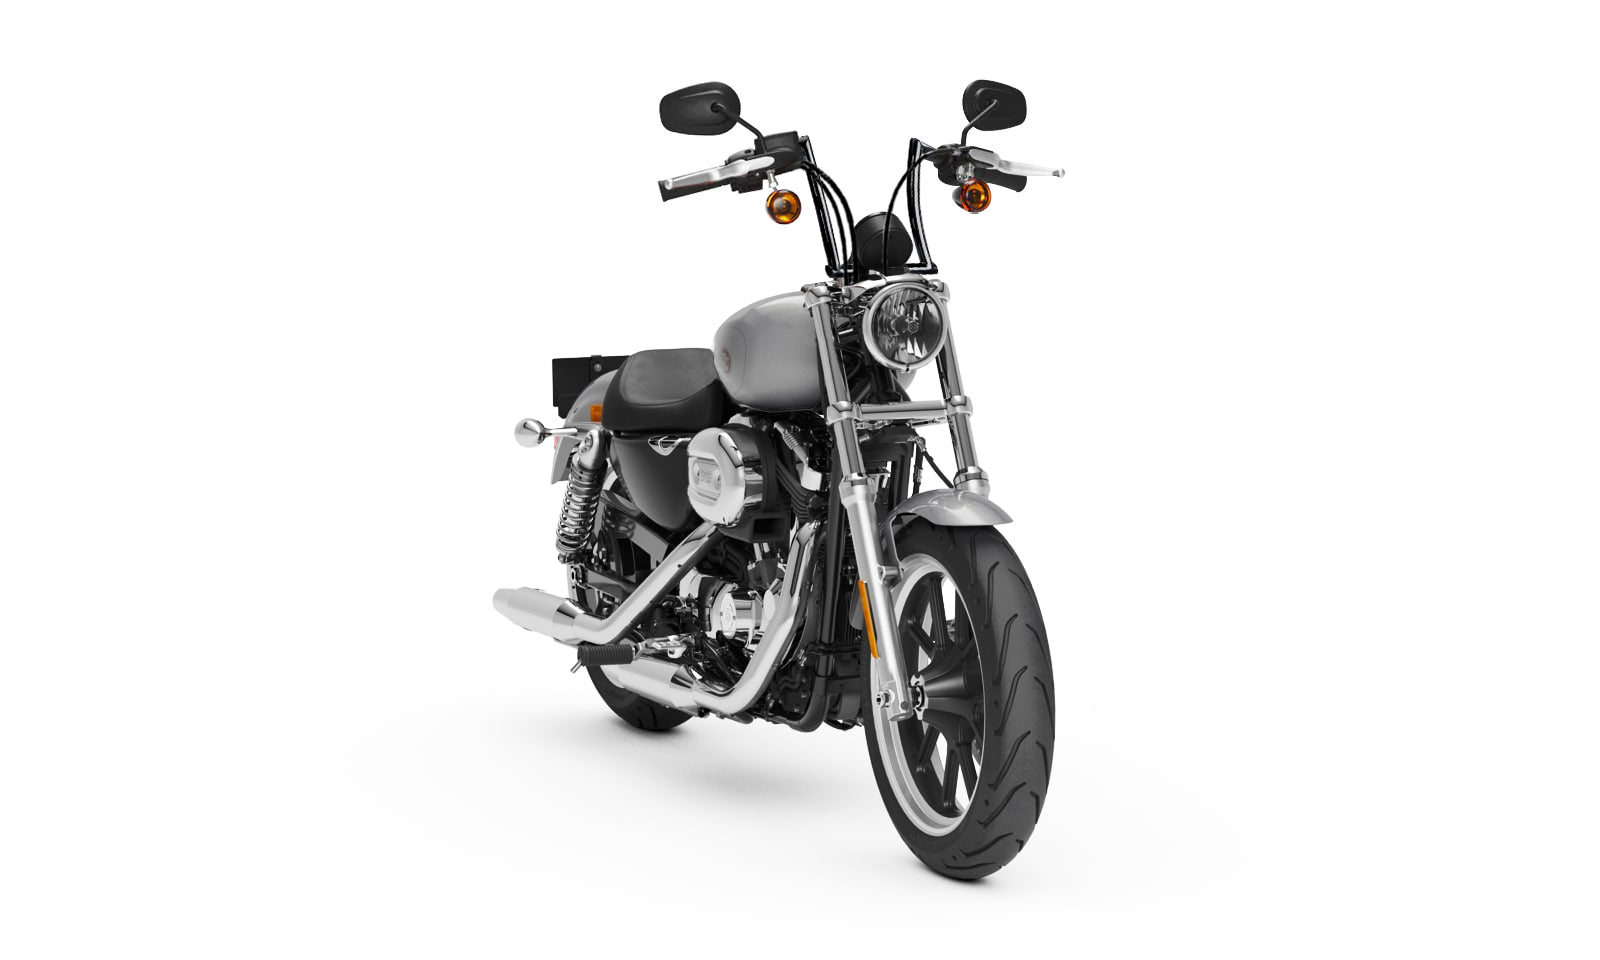 Viking Iron Born 9" Handlebar For Harley Sportster Superlow Gloss Black Bag on Bike View @expand